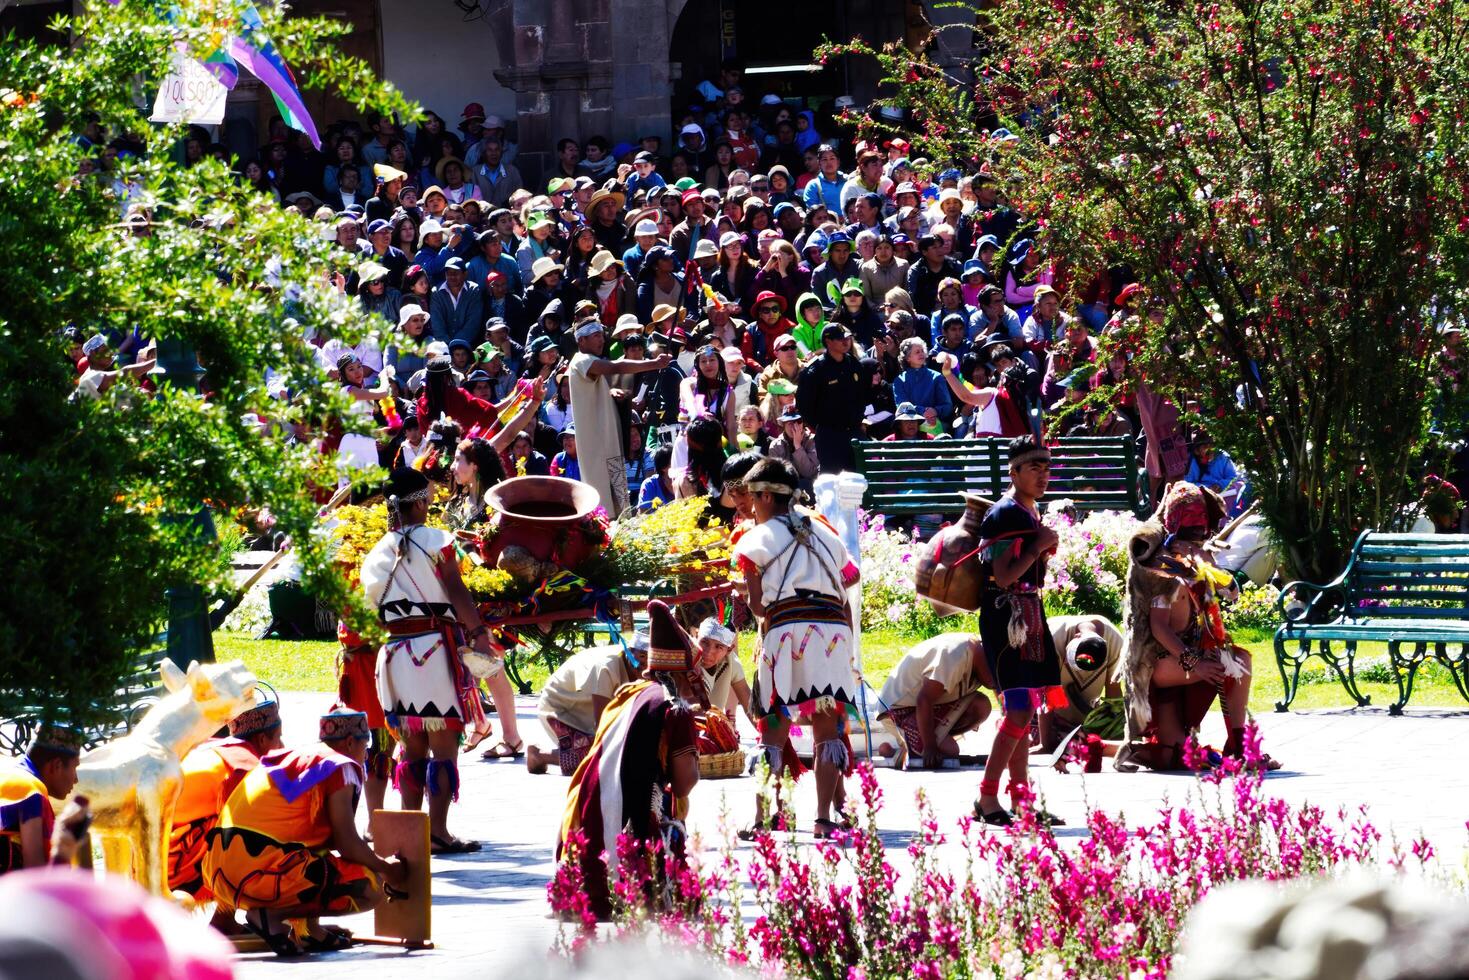 Cusco, Peru, 2015 - Inti Raymi Festival South America Performance Crowd photo